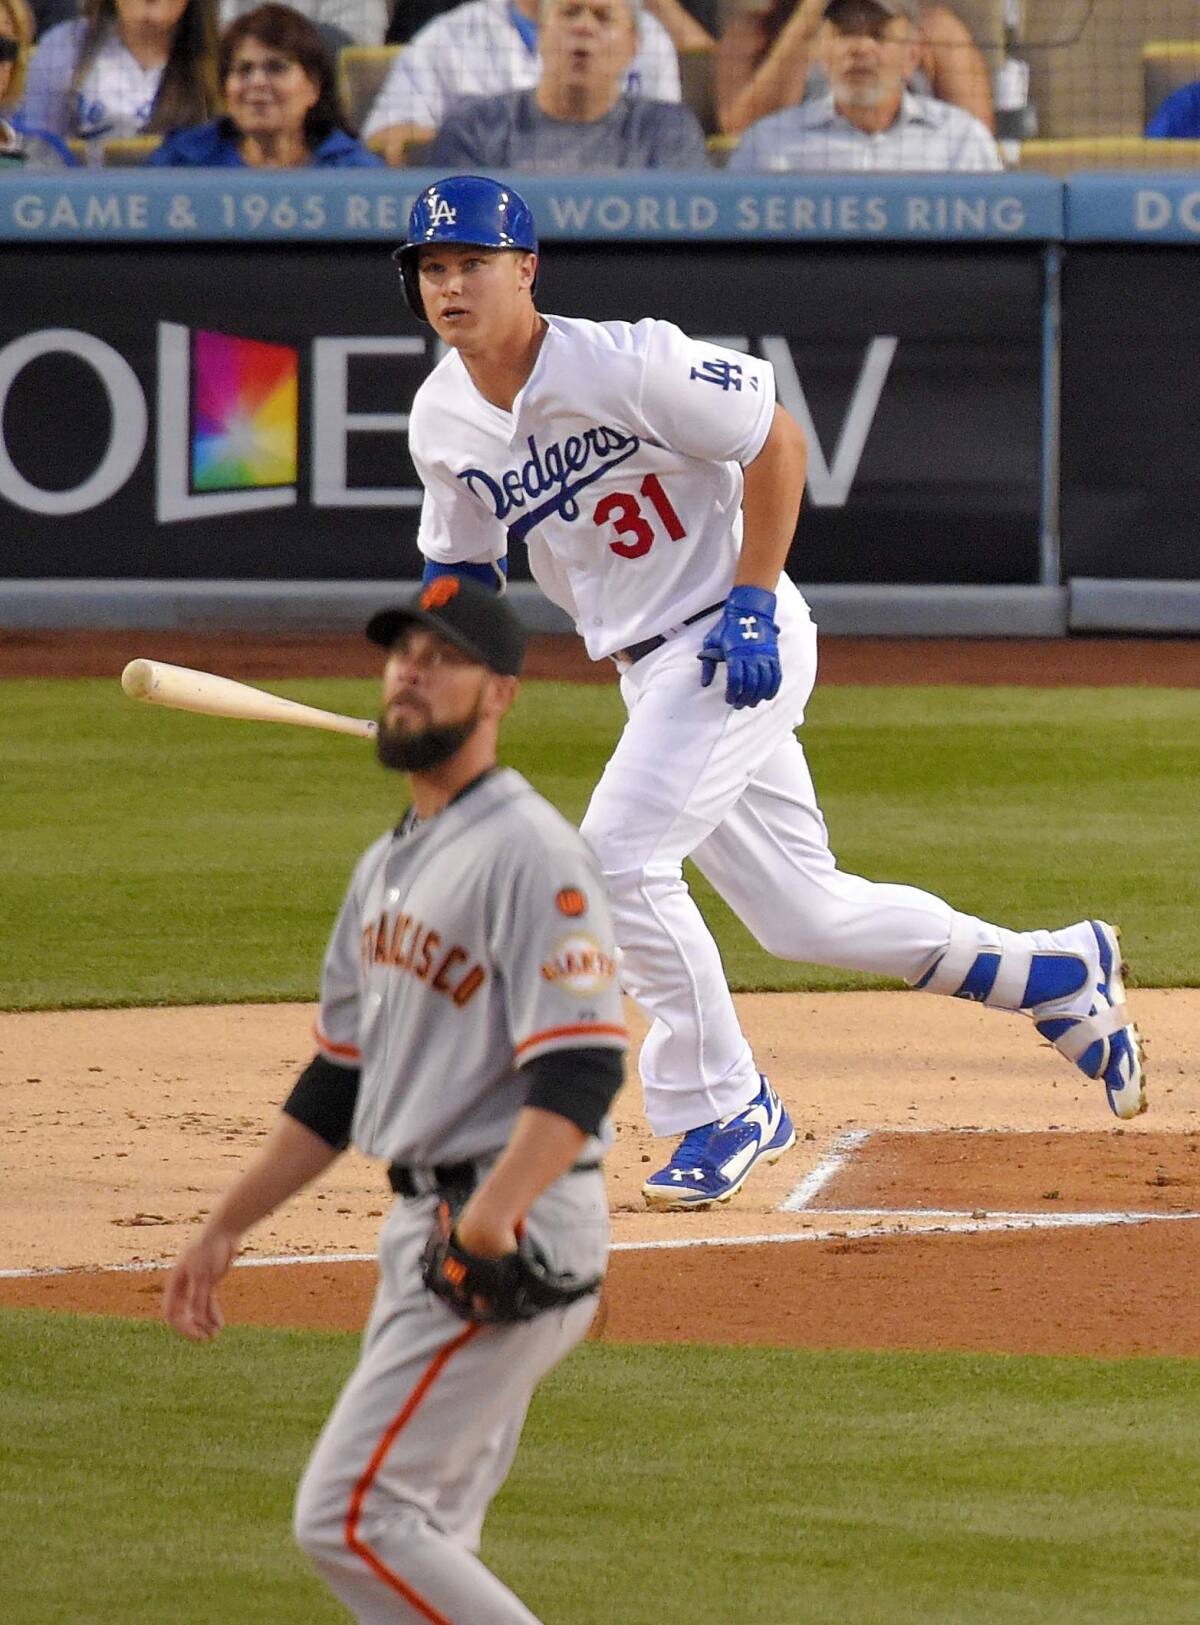 WATCH: Joc Pederson hits a 3-run home run as the Dodgers win Game